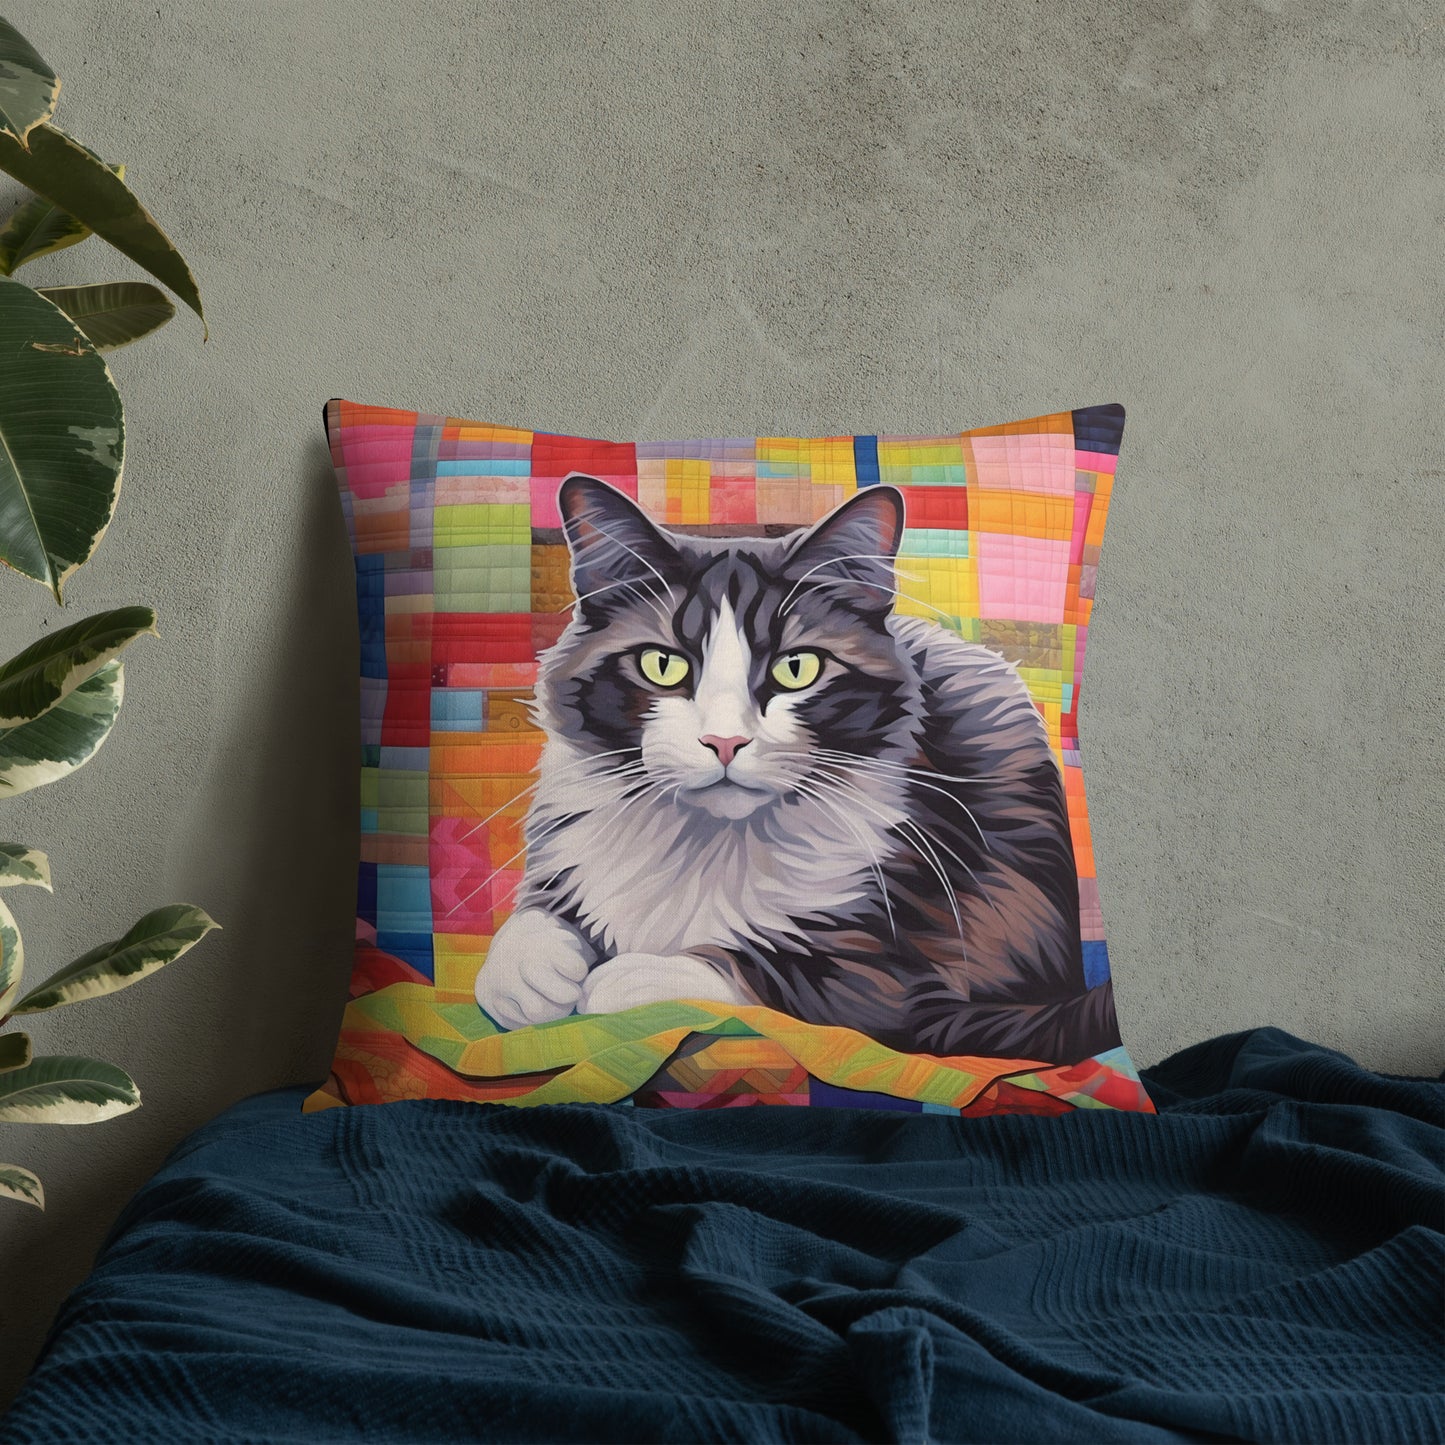 Bessie - Grey & White Cat on a Quilt Pillow